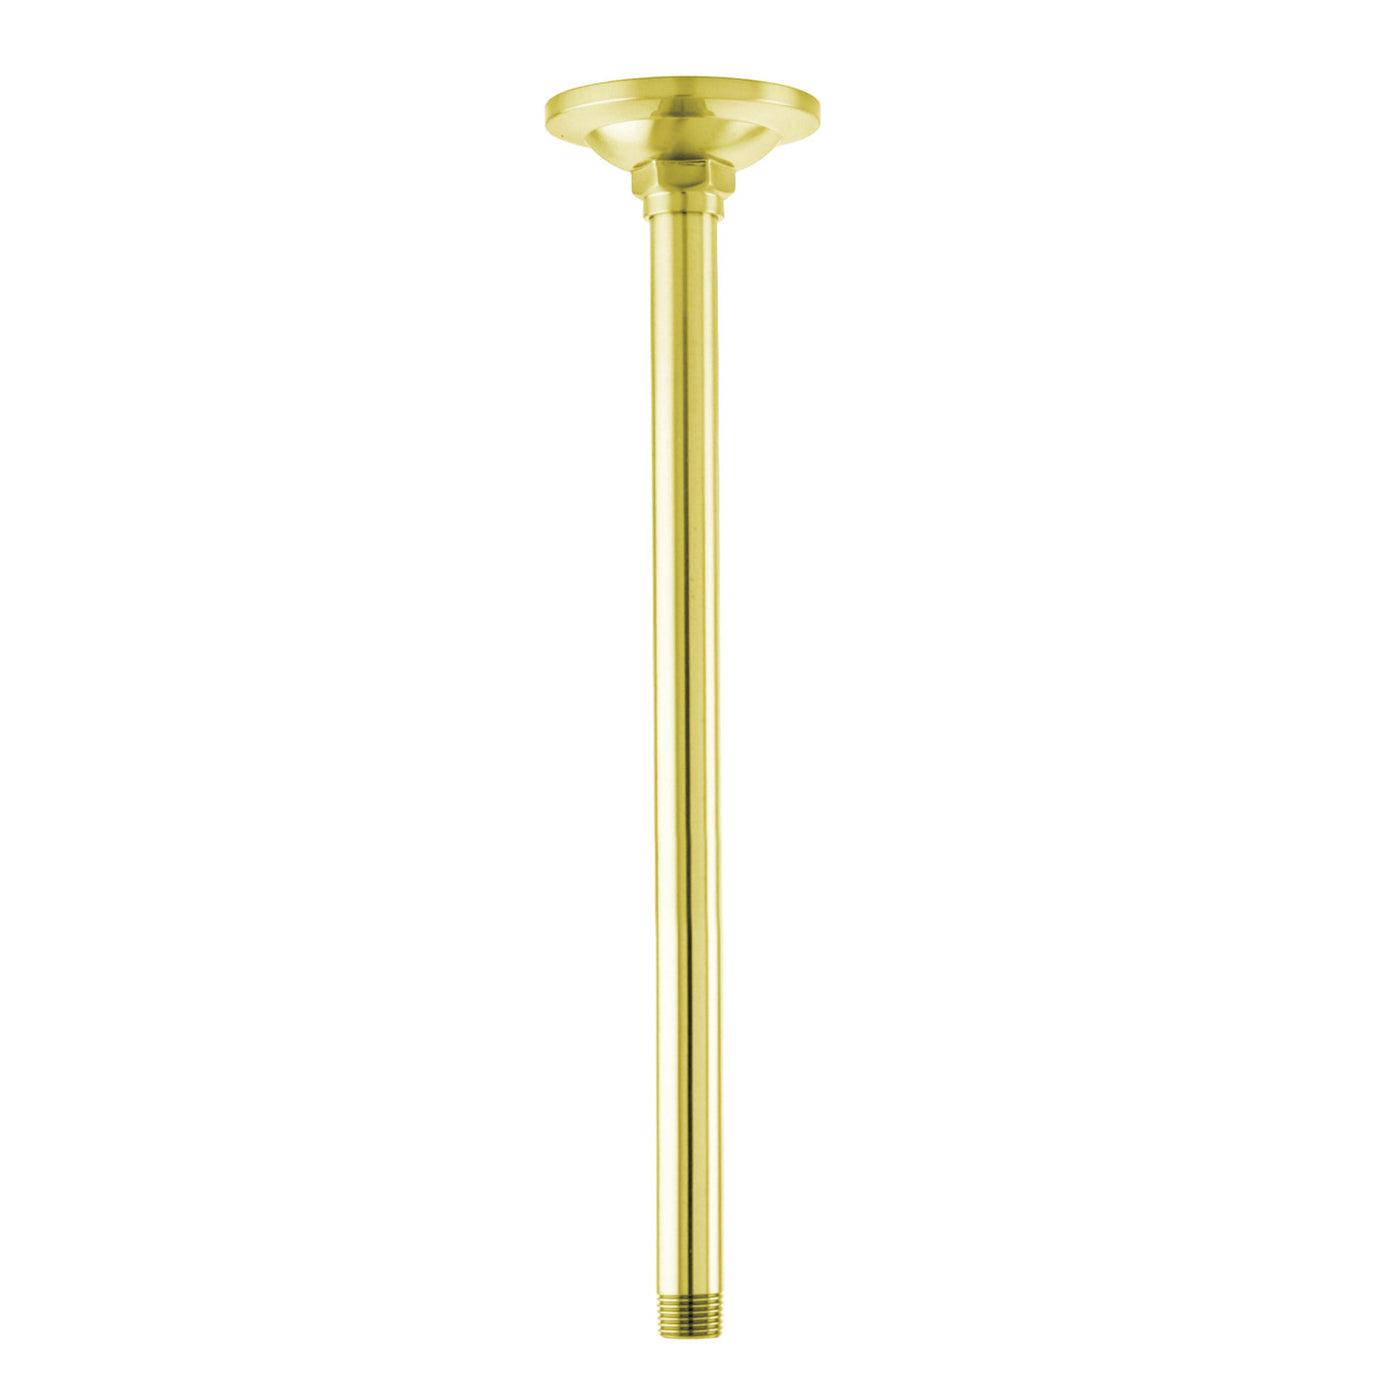 Elements of Design DK2102 10-Inch Rain Drop Ceiling Mount Shower Arm, Polished Brass